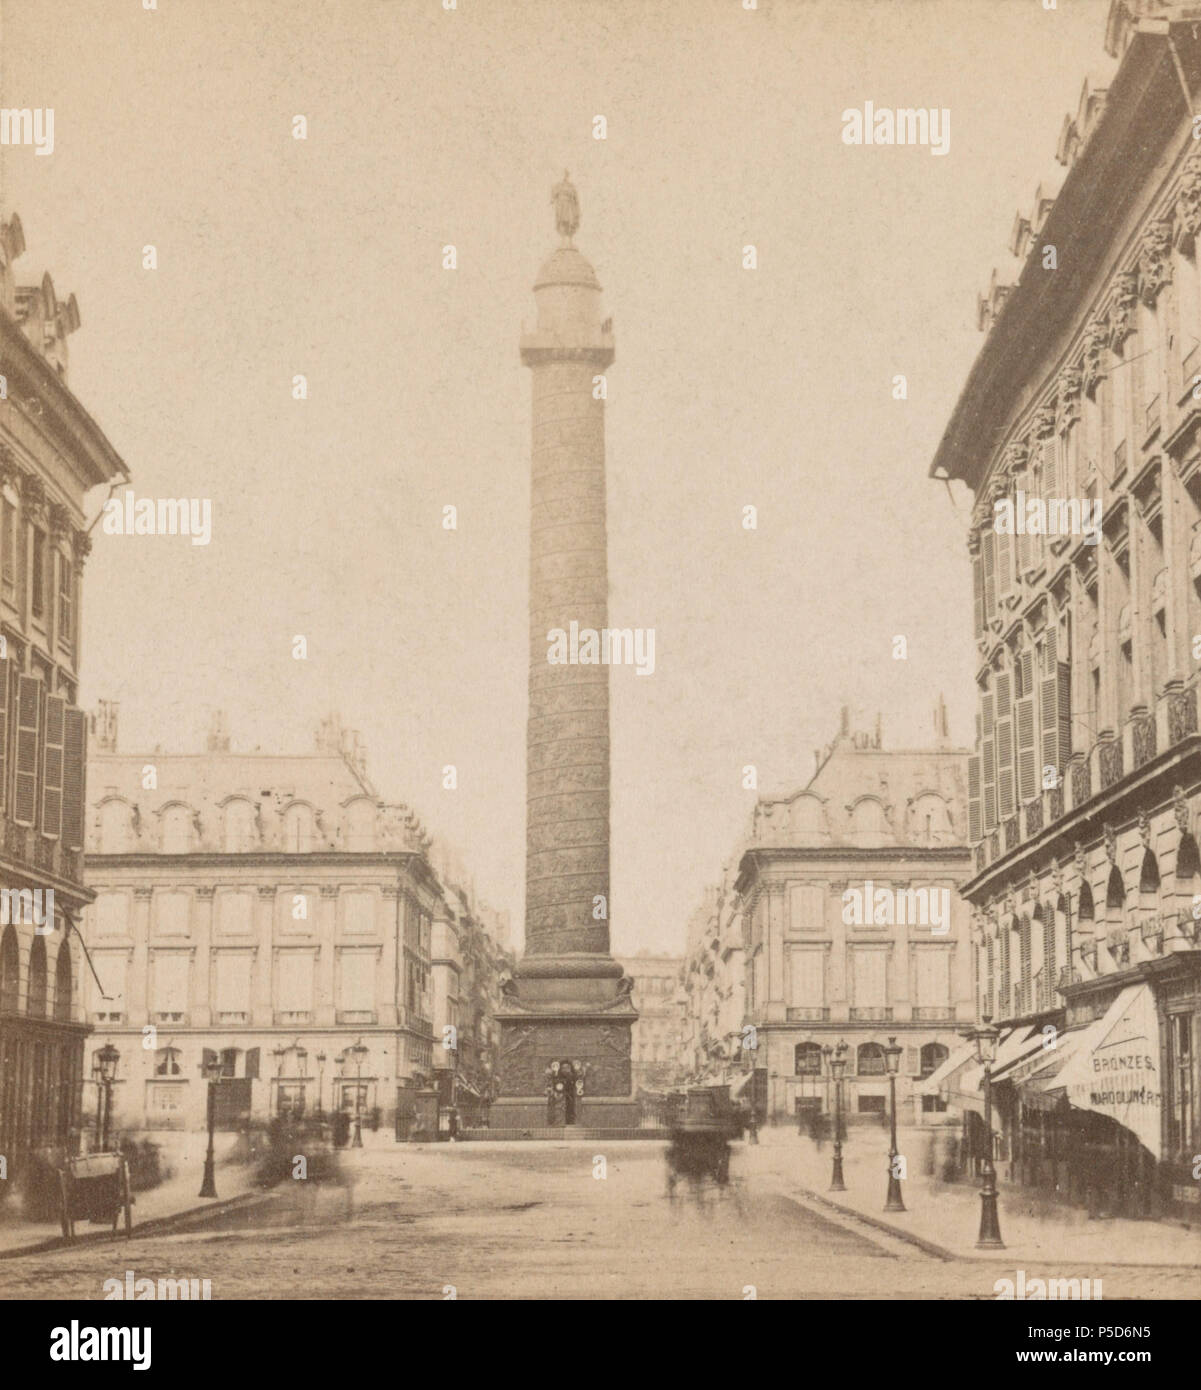 Colonne Vendome. Stereograph shows monument to Napoleon's victory at Austerlitz at Place Vendôme, Paris.. between 1860 and 1870. N/A 368 Colonne Vendome 1 Stock Photo